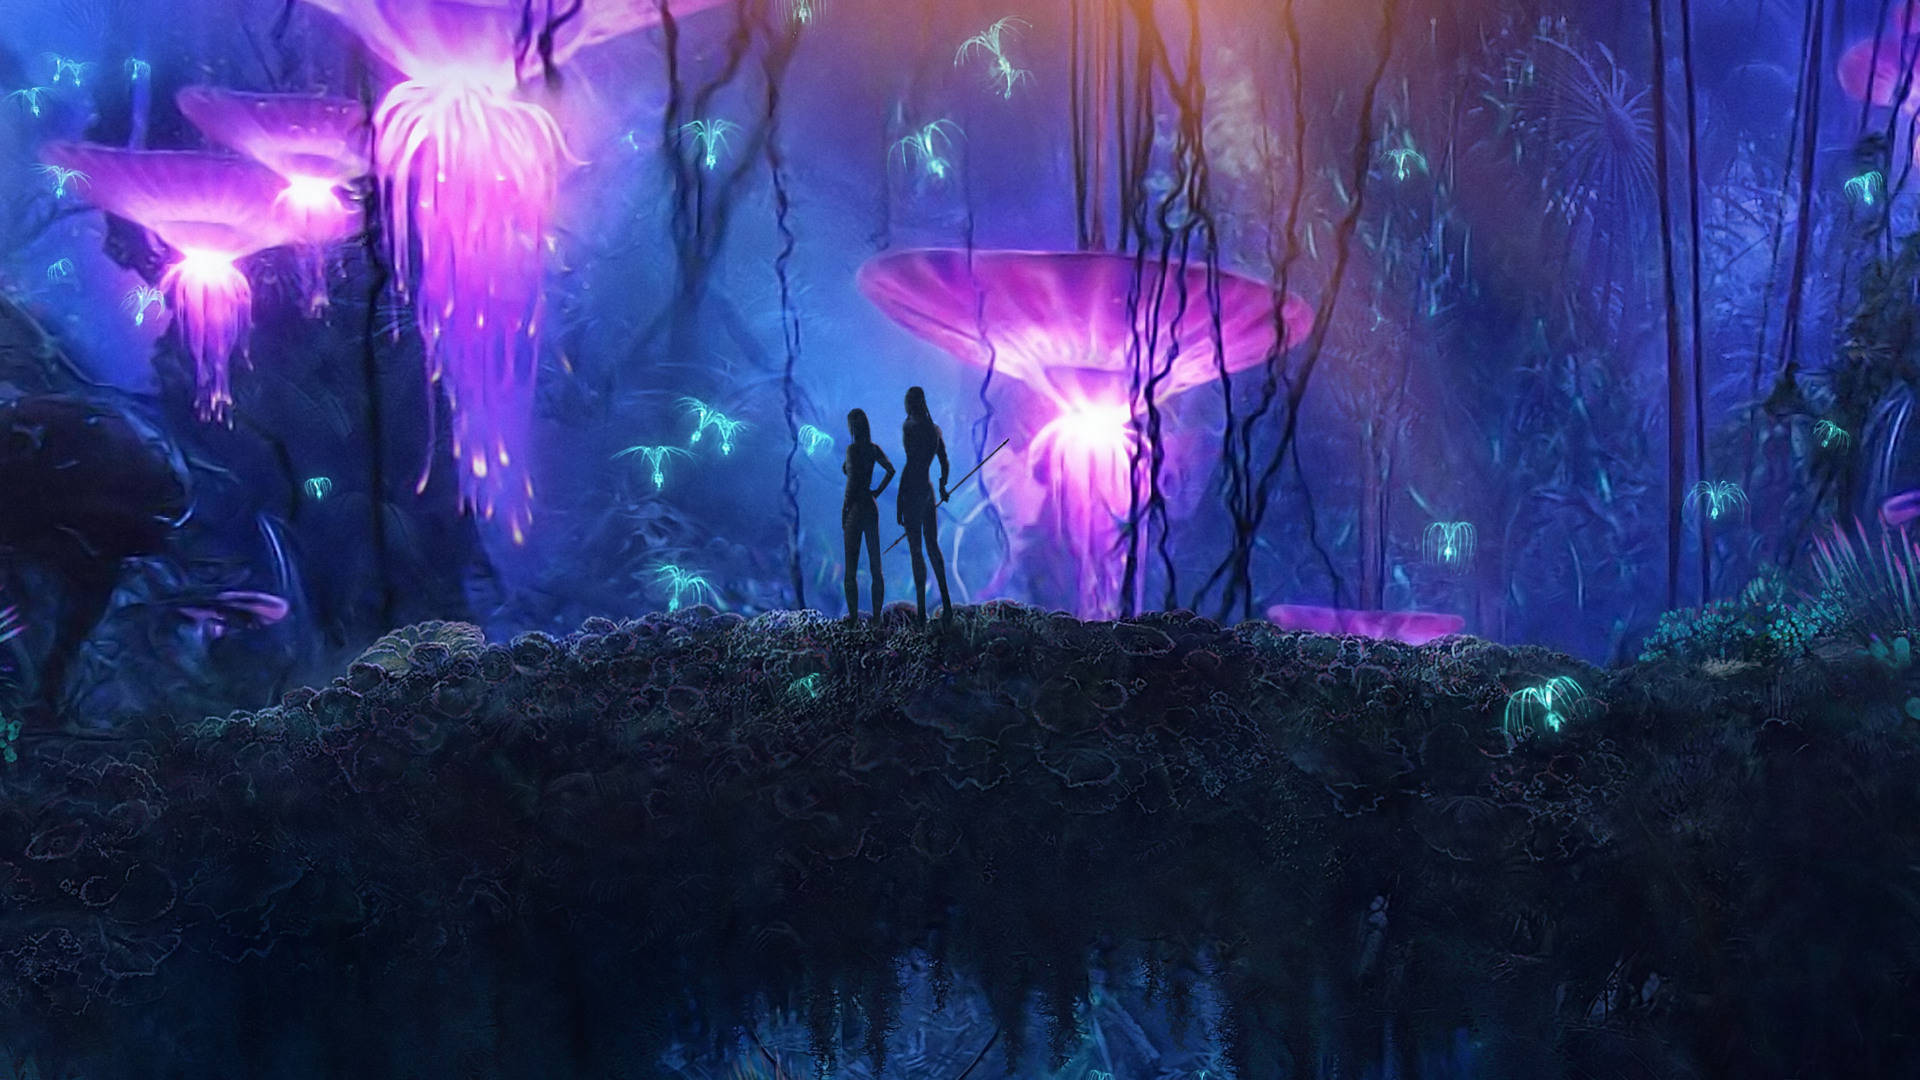 Magic Avatar Forest In Hd Wallpaper